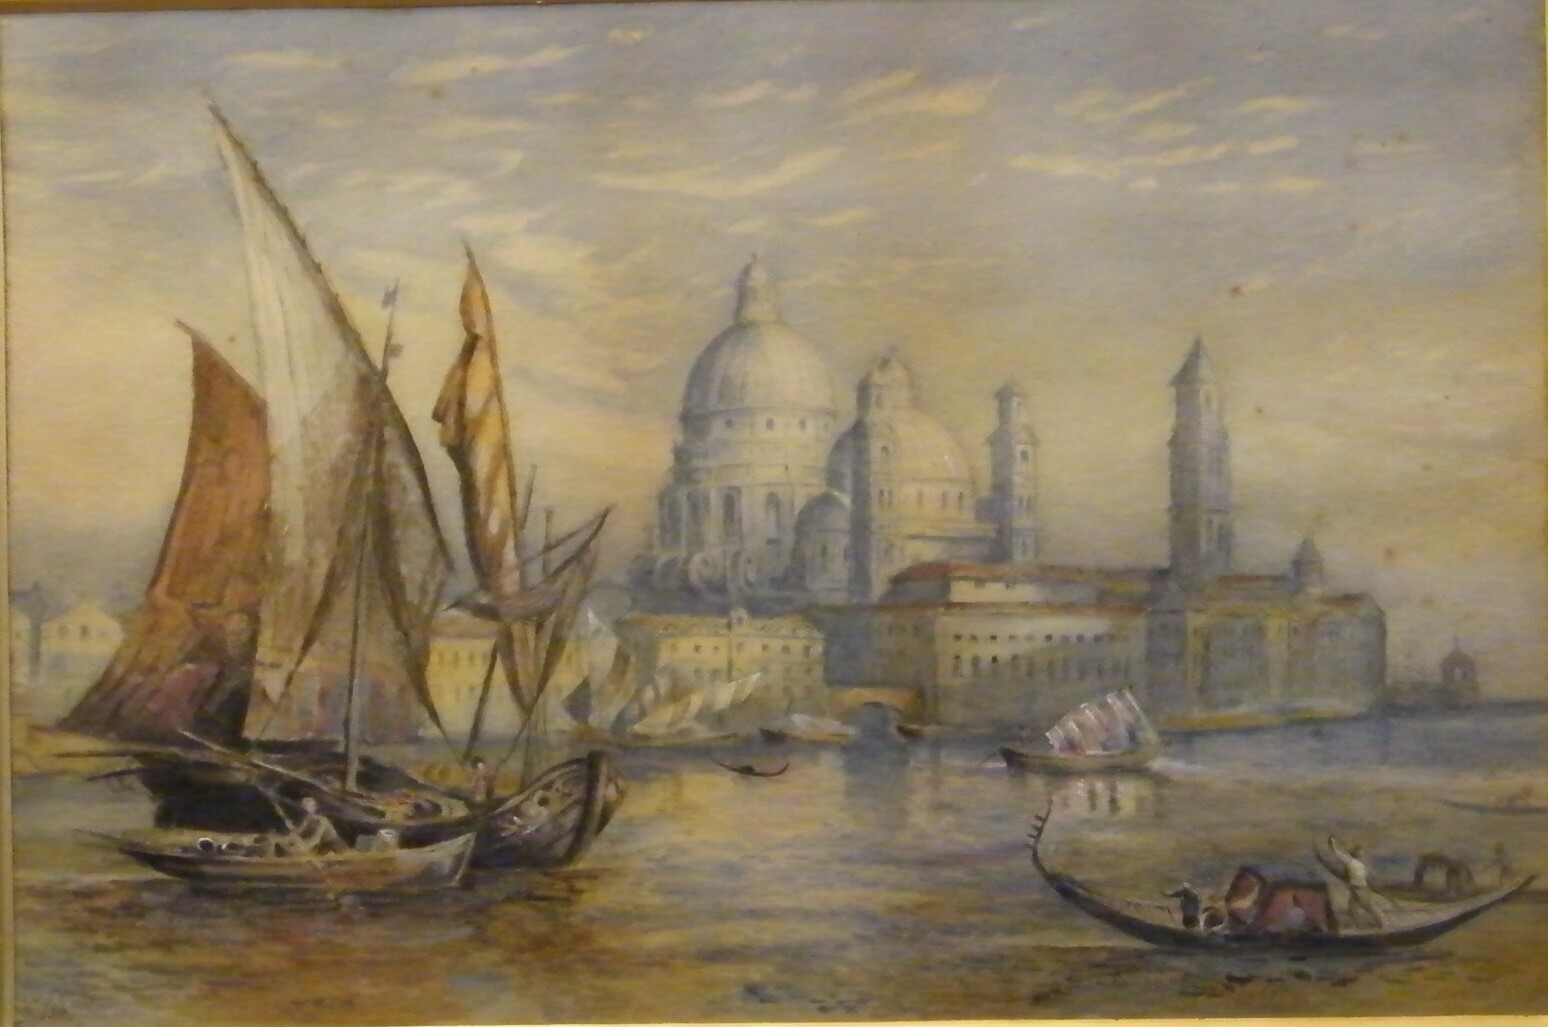 RAYMOND DEARN
A Venetian scene with 
gondolas and shipping.
Watercolour.
Signed.
35 x 52.5cm.